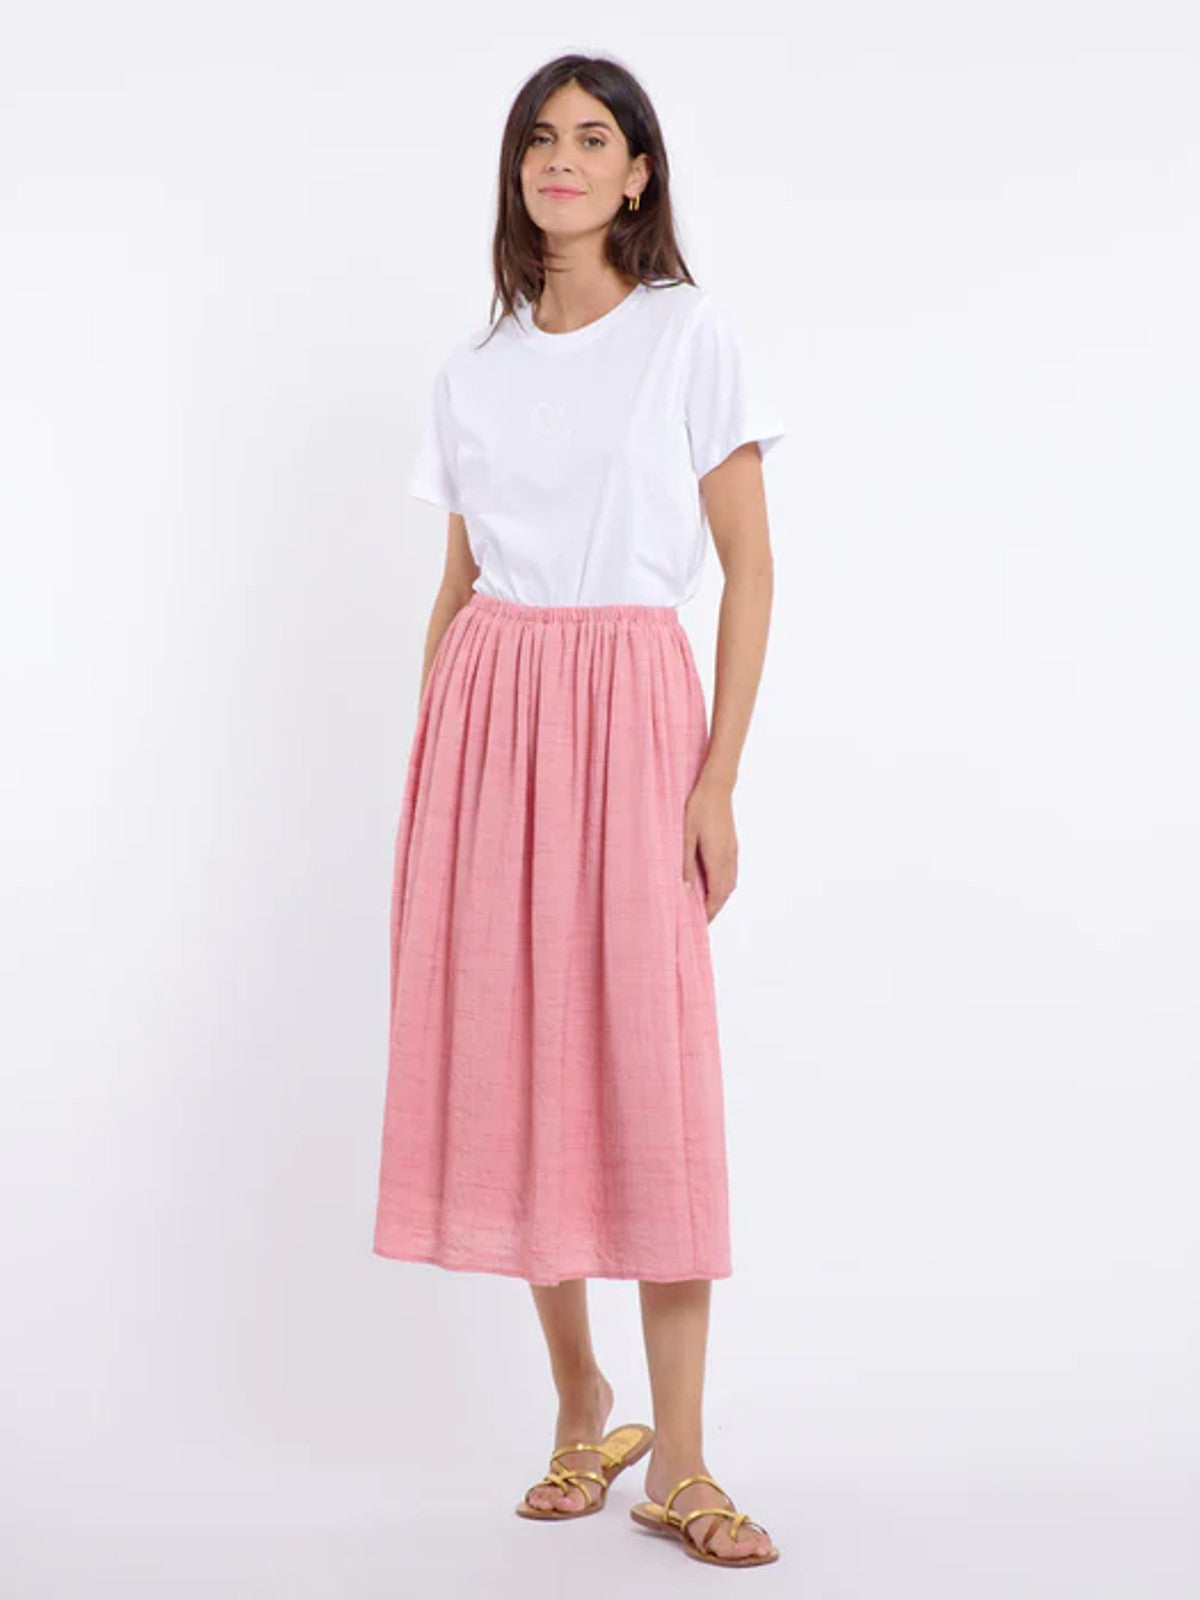 Auxane Skirt